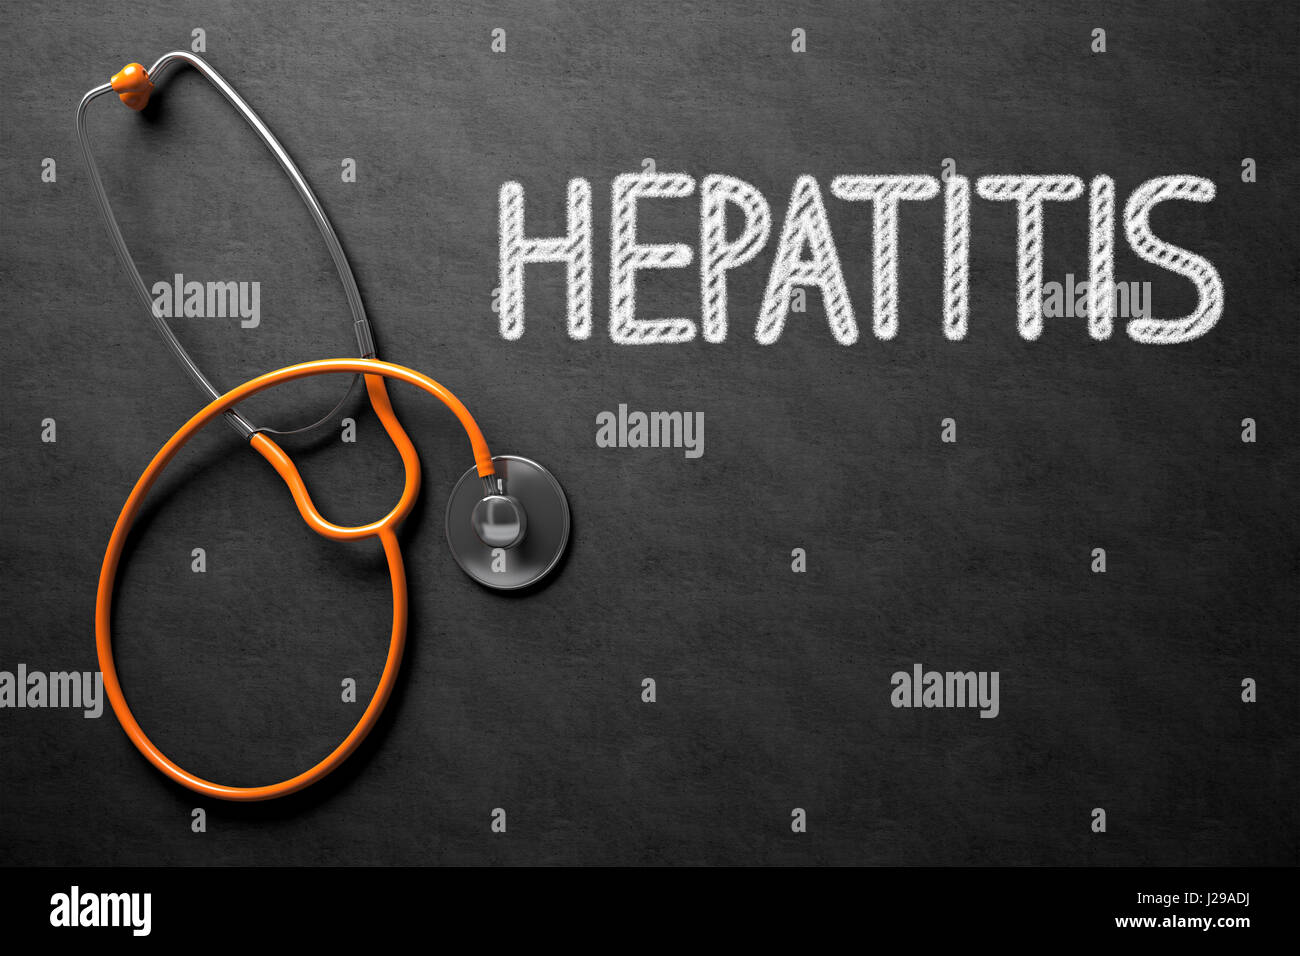 Hepatitis Concept on Chalkboard. 3D Illustration. Stock Photo